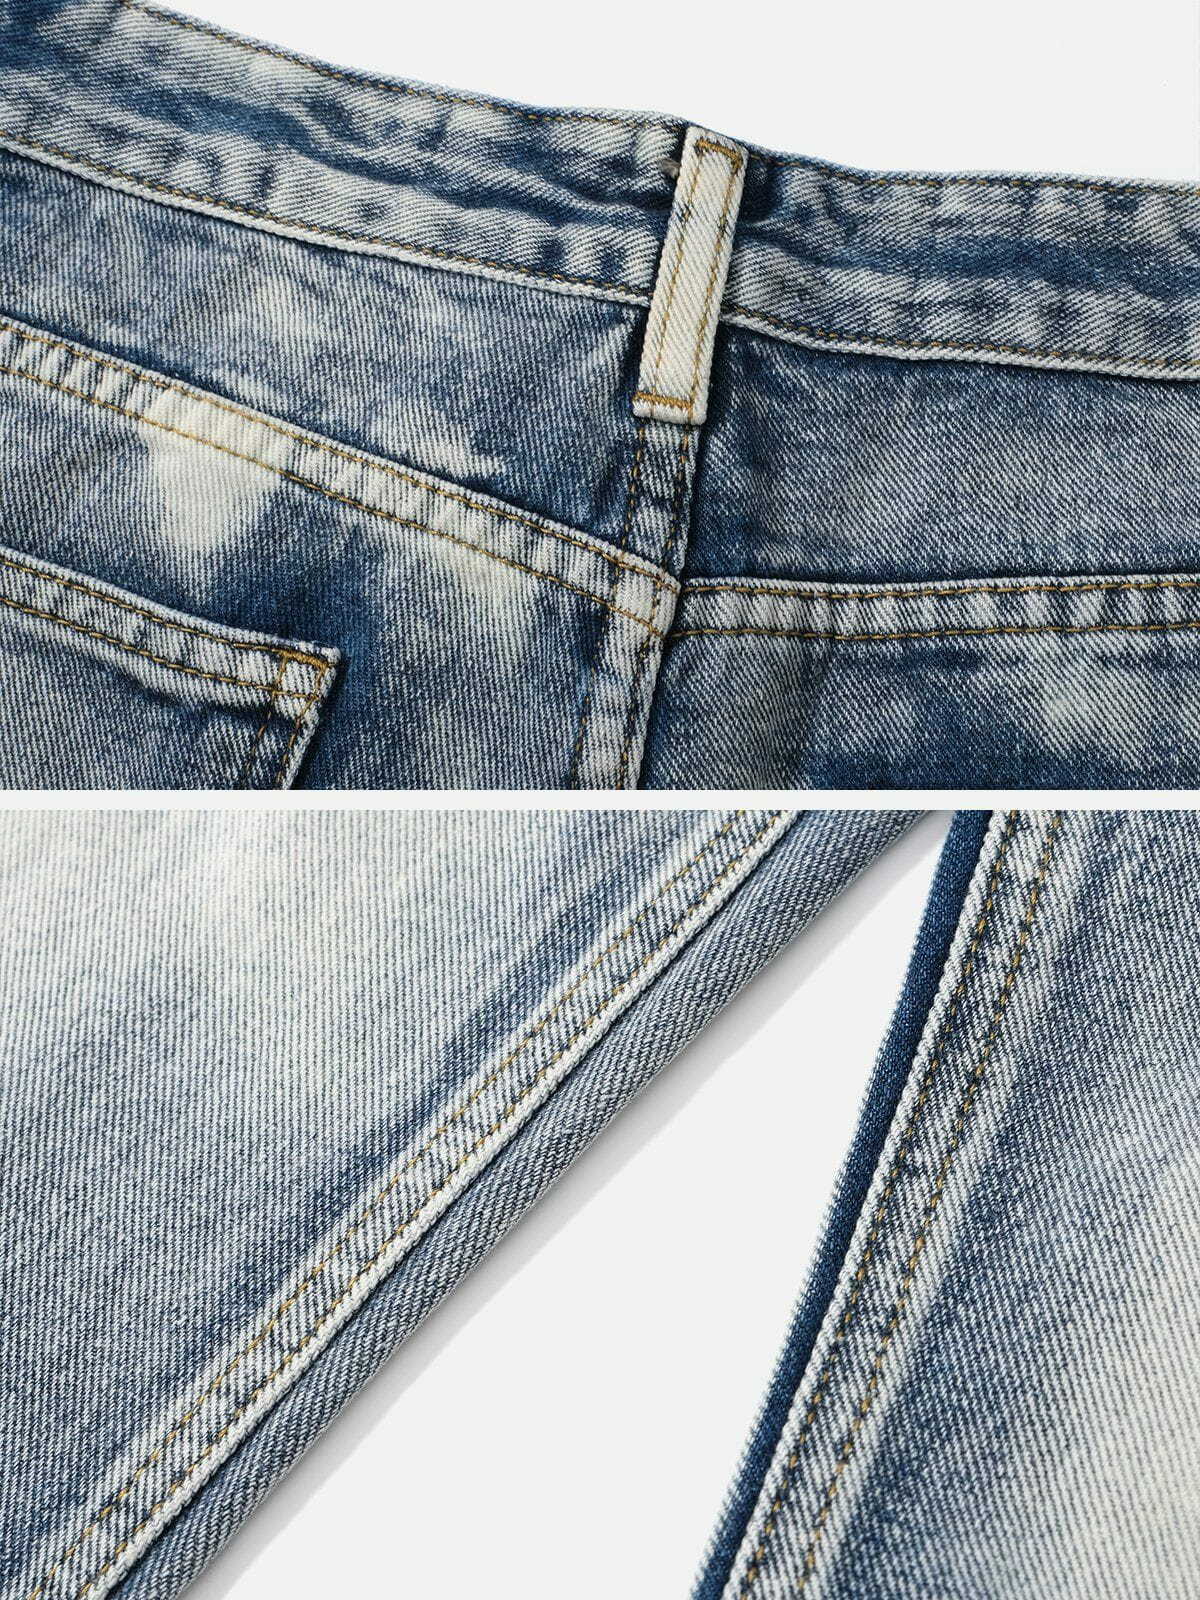 vibrant tiedye jeans edgy & trendy streetwear 3916